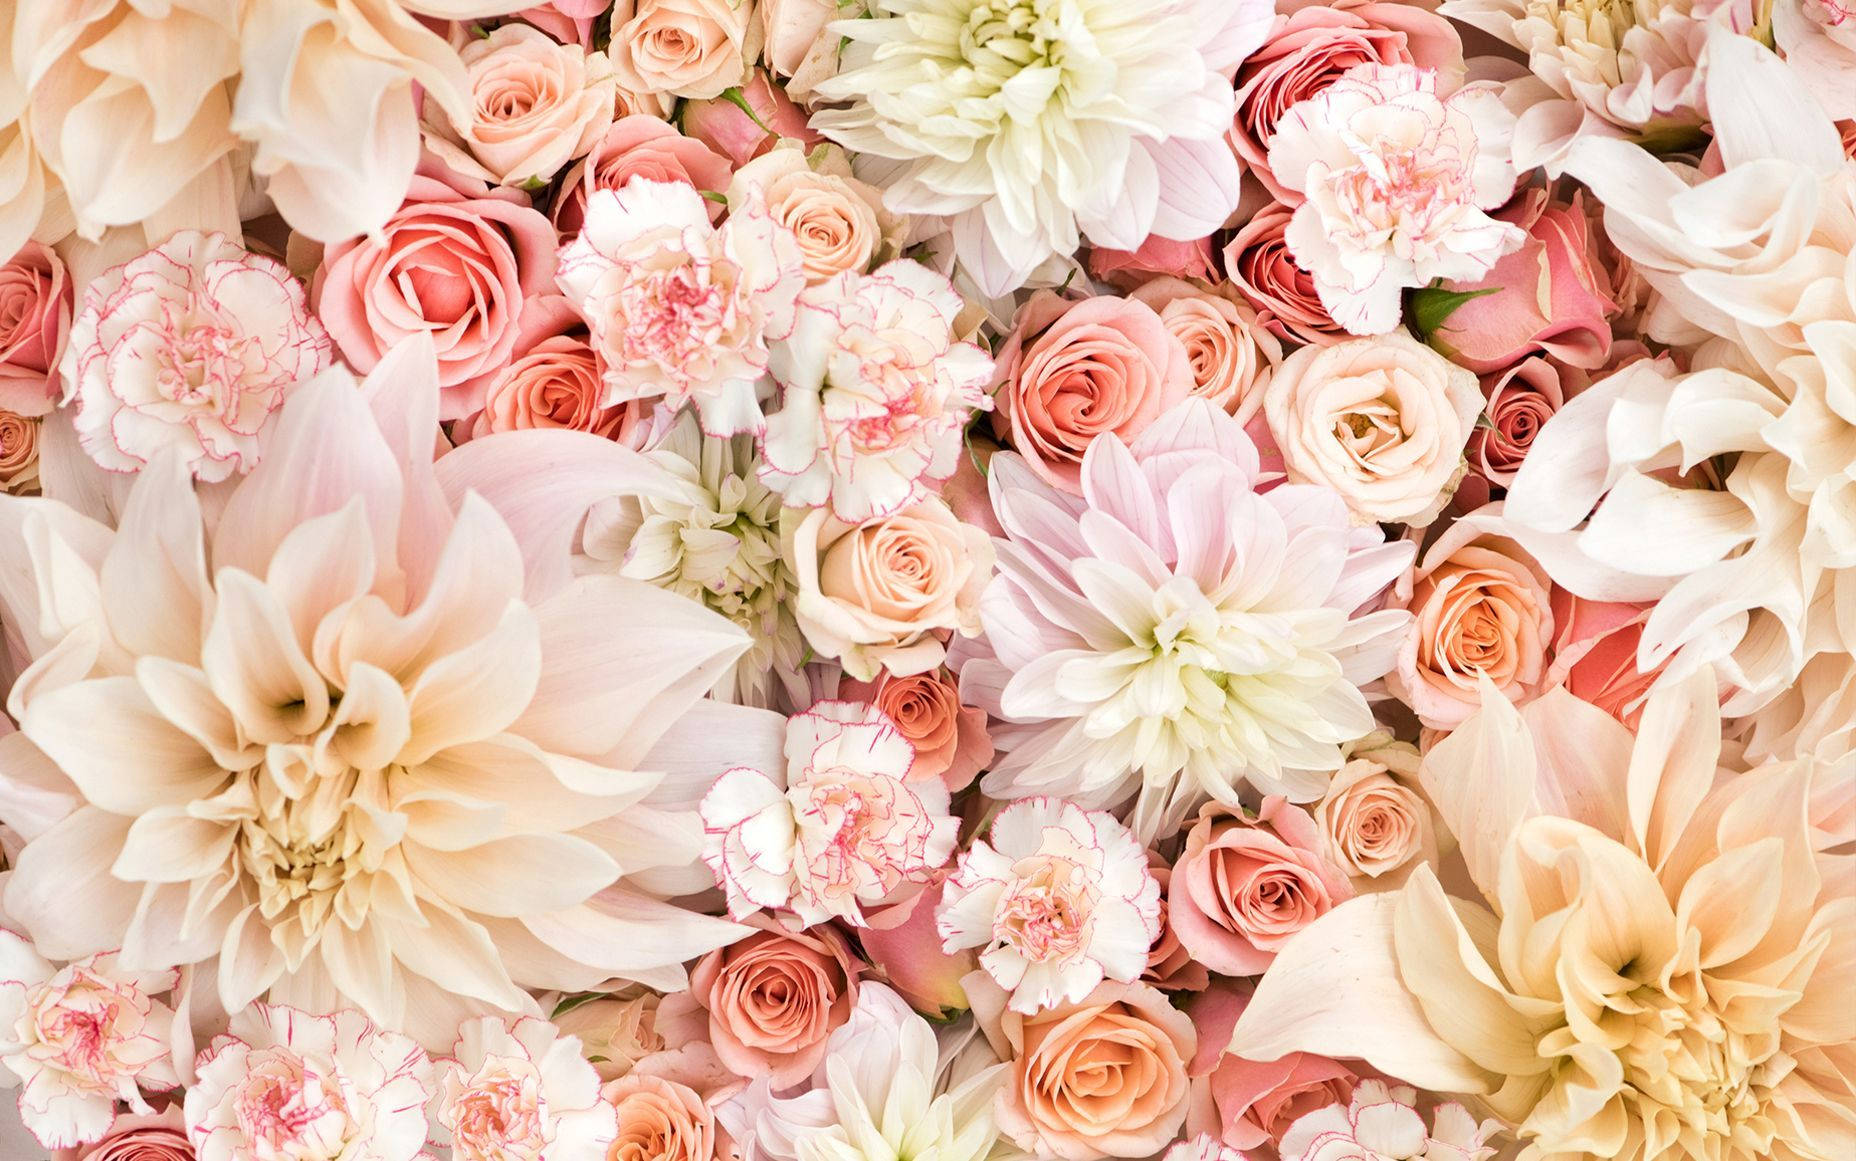 Pastel Flowers Images  Free Download on Freepik